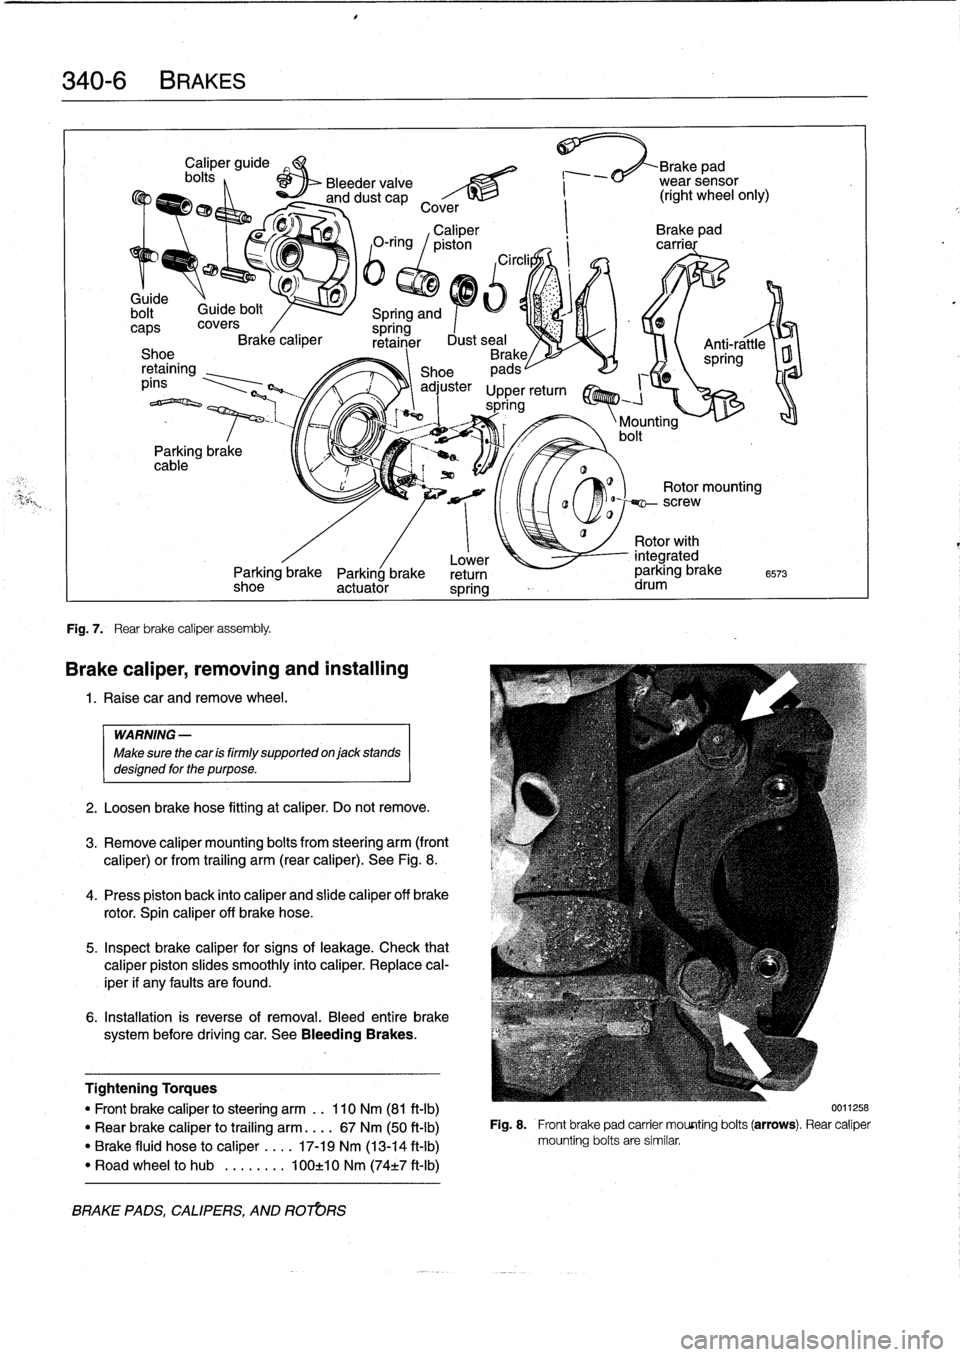 BMW 323i 1995 E36 Owners Manual 
340-
6BRAKES

bolt~

	

Guide
bolt

caps
covers
Brake
caliper
Shoe
retaining
píns

Parking
brake
cable

Fig
.
7
.

	

Rear
brake
caliper
assembly
.

Caliper
guide

	

Brake

	

ad
bolts
,

	

Bleede